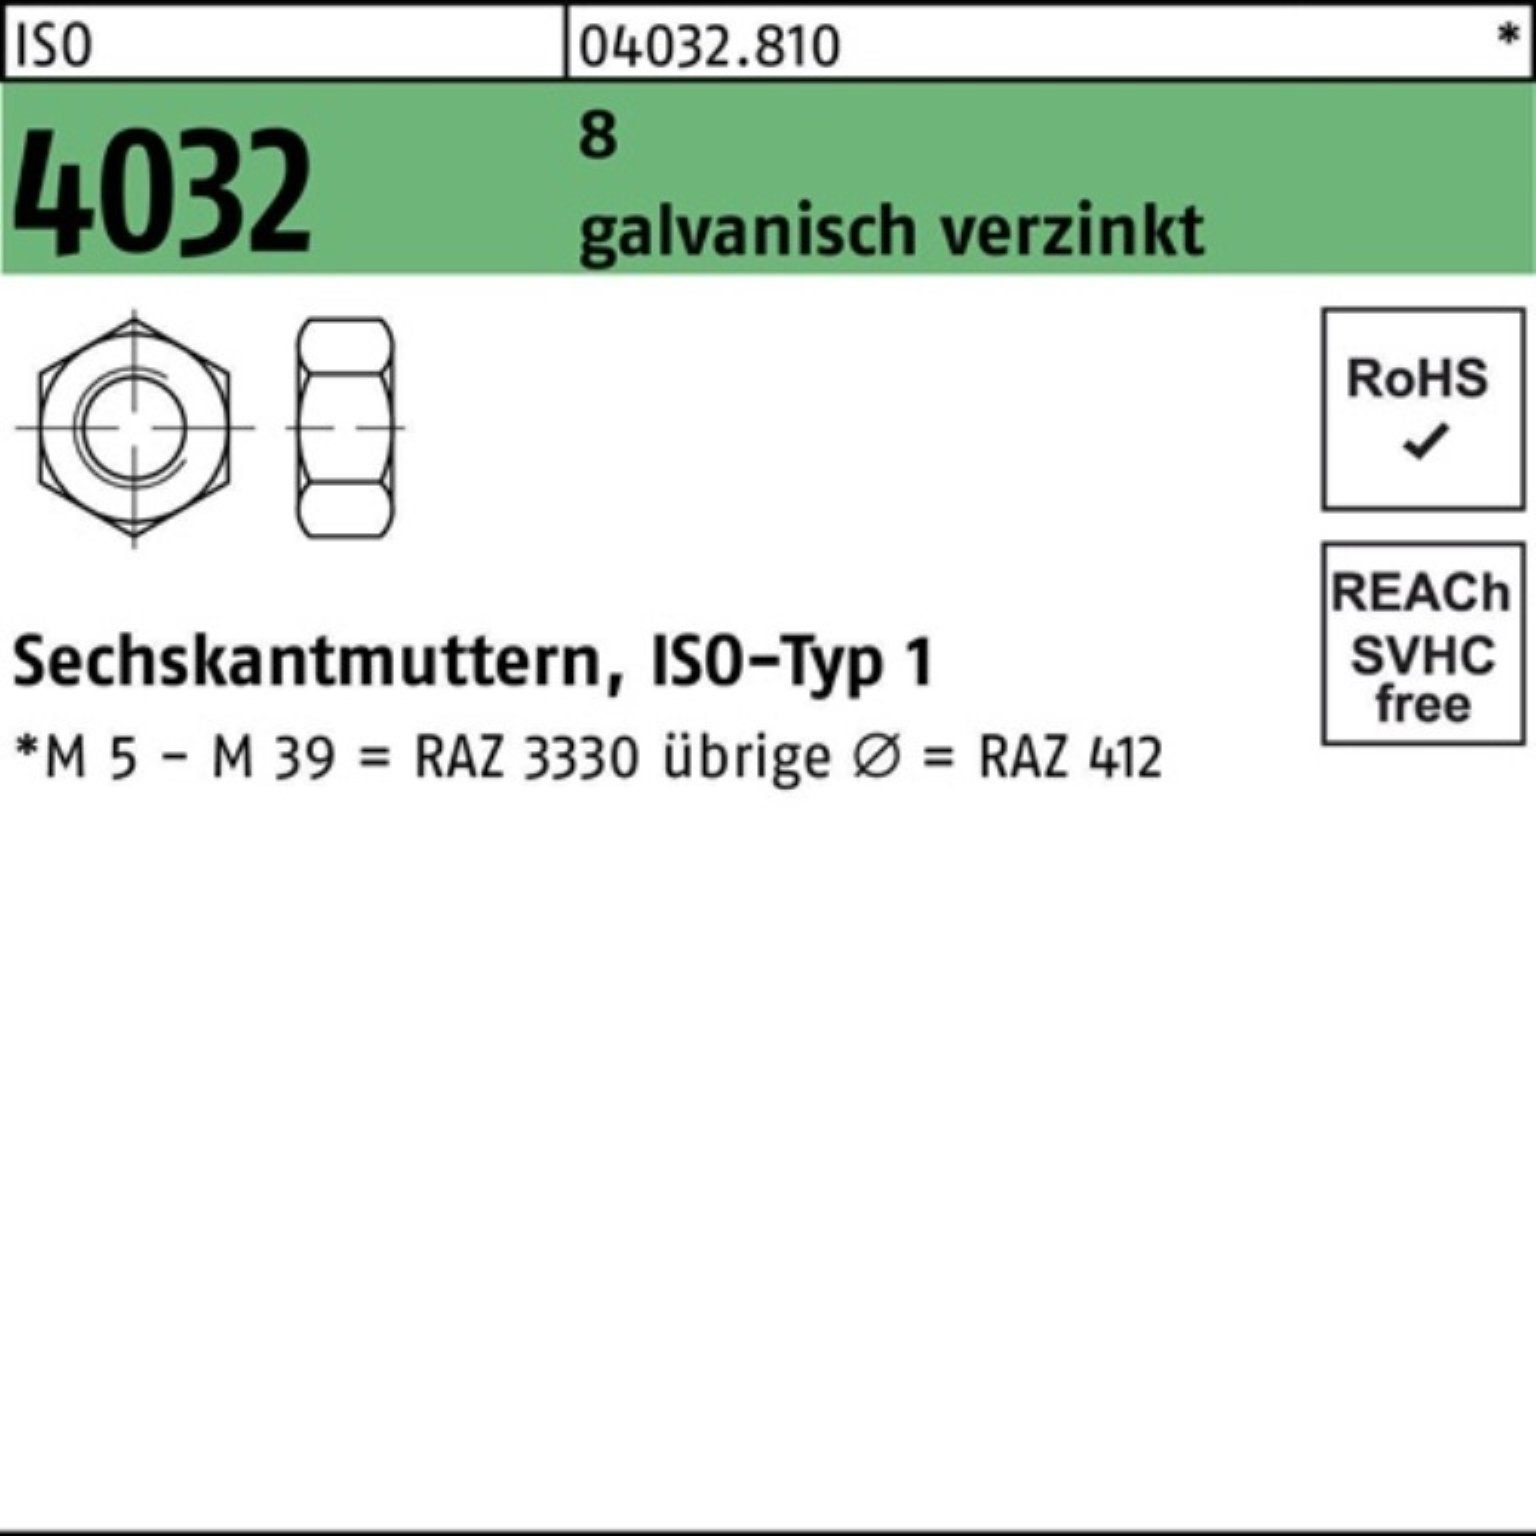 100 M6 galv.verz. ISO Pack 4032 Sechskantmutter Muttern 8 Stück 403 ISO Bufab 100er